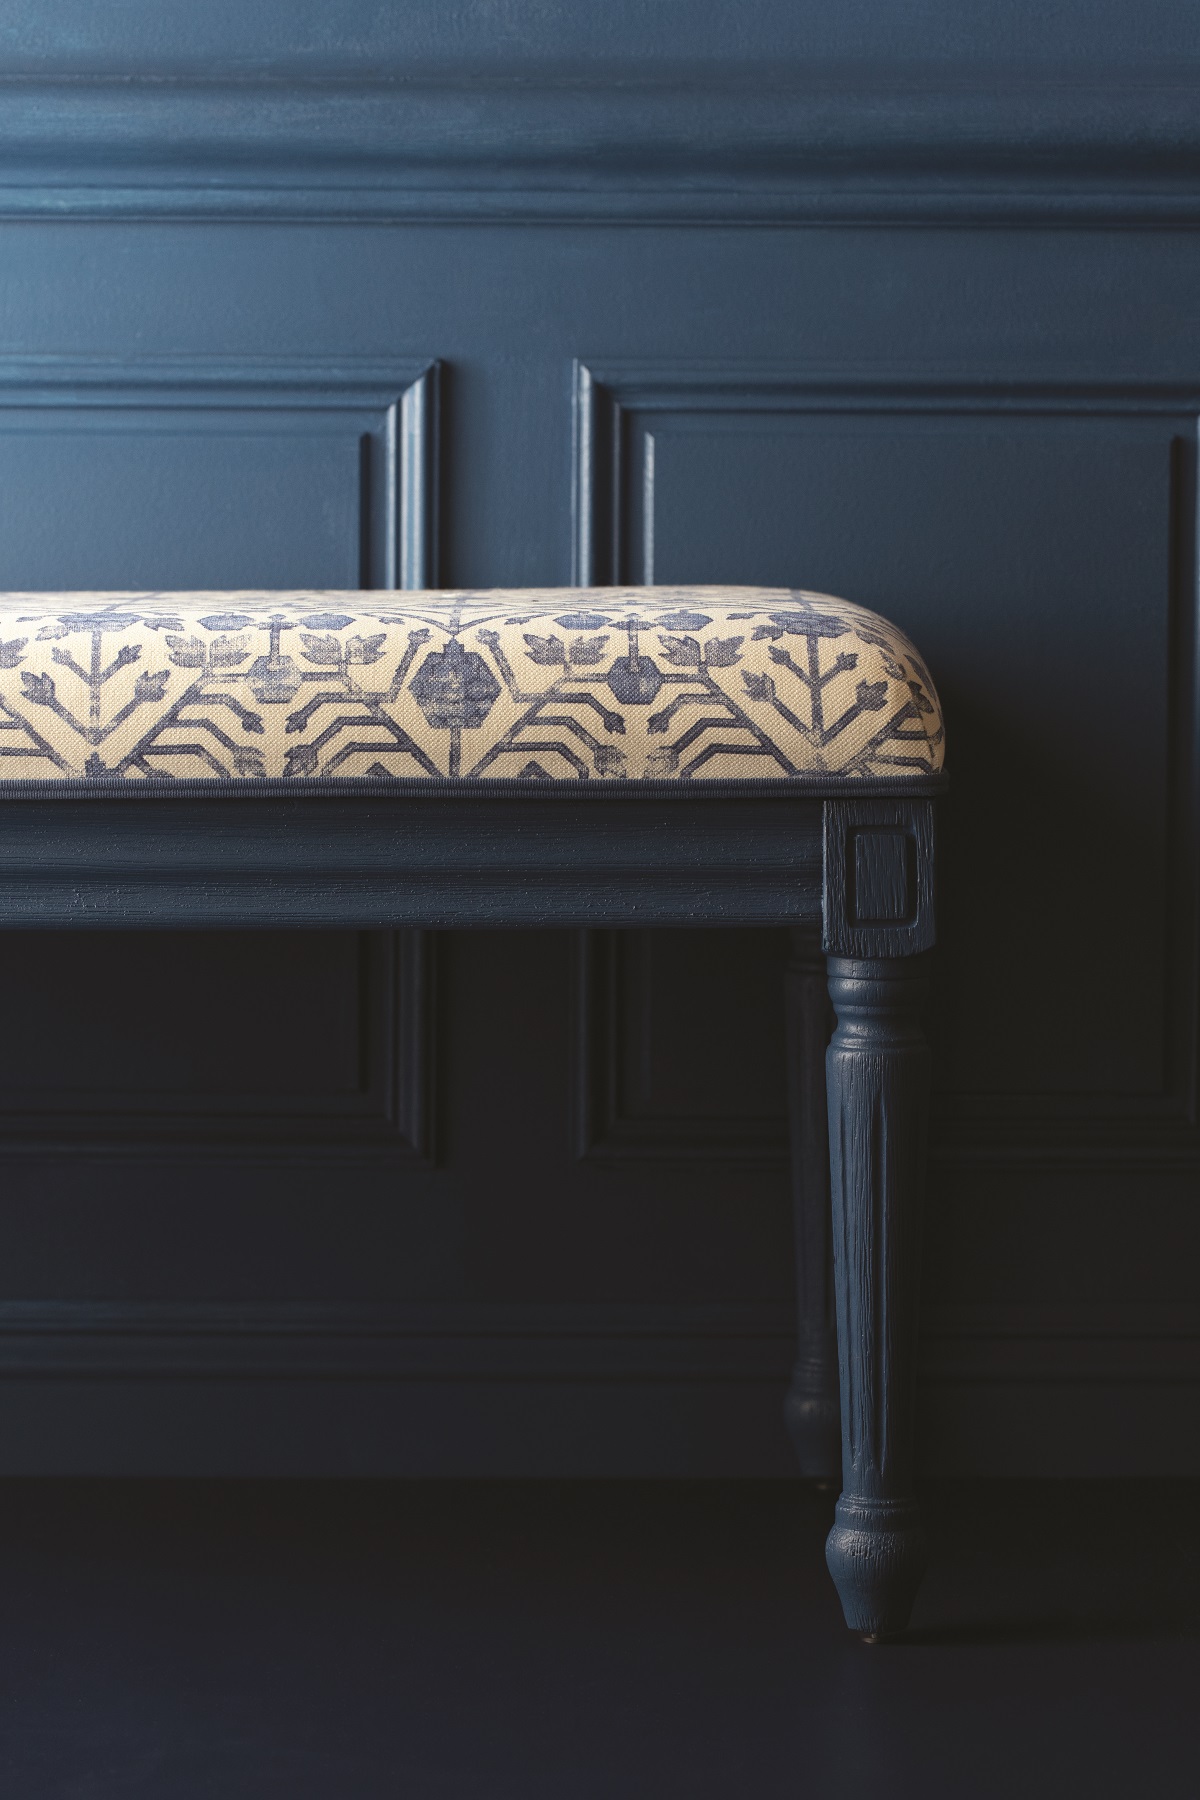 dark blue upholstered stool against adark blue wall with trim detail from Samuel & Sons